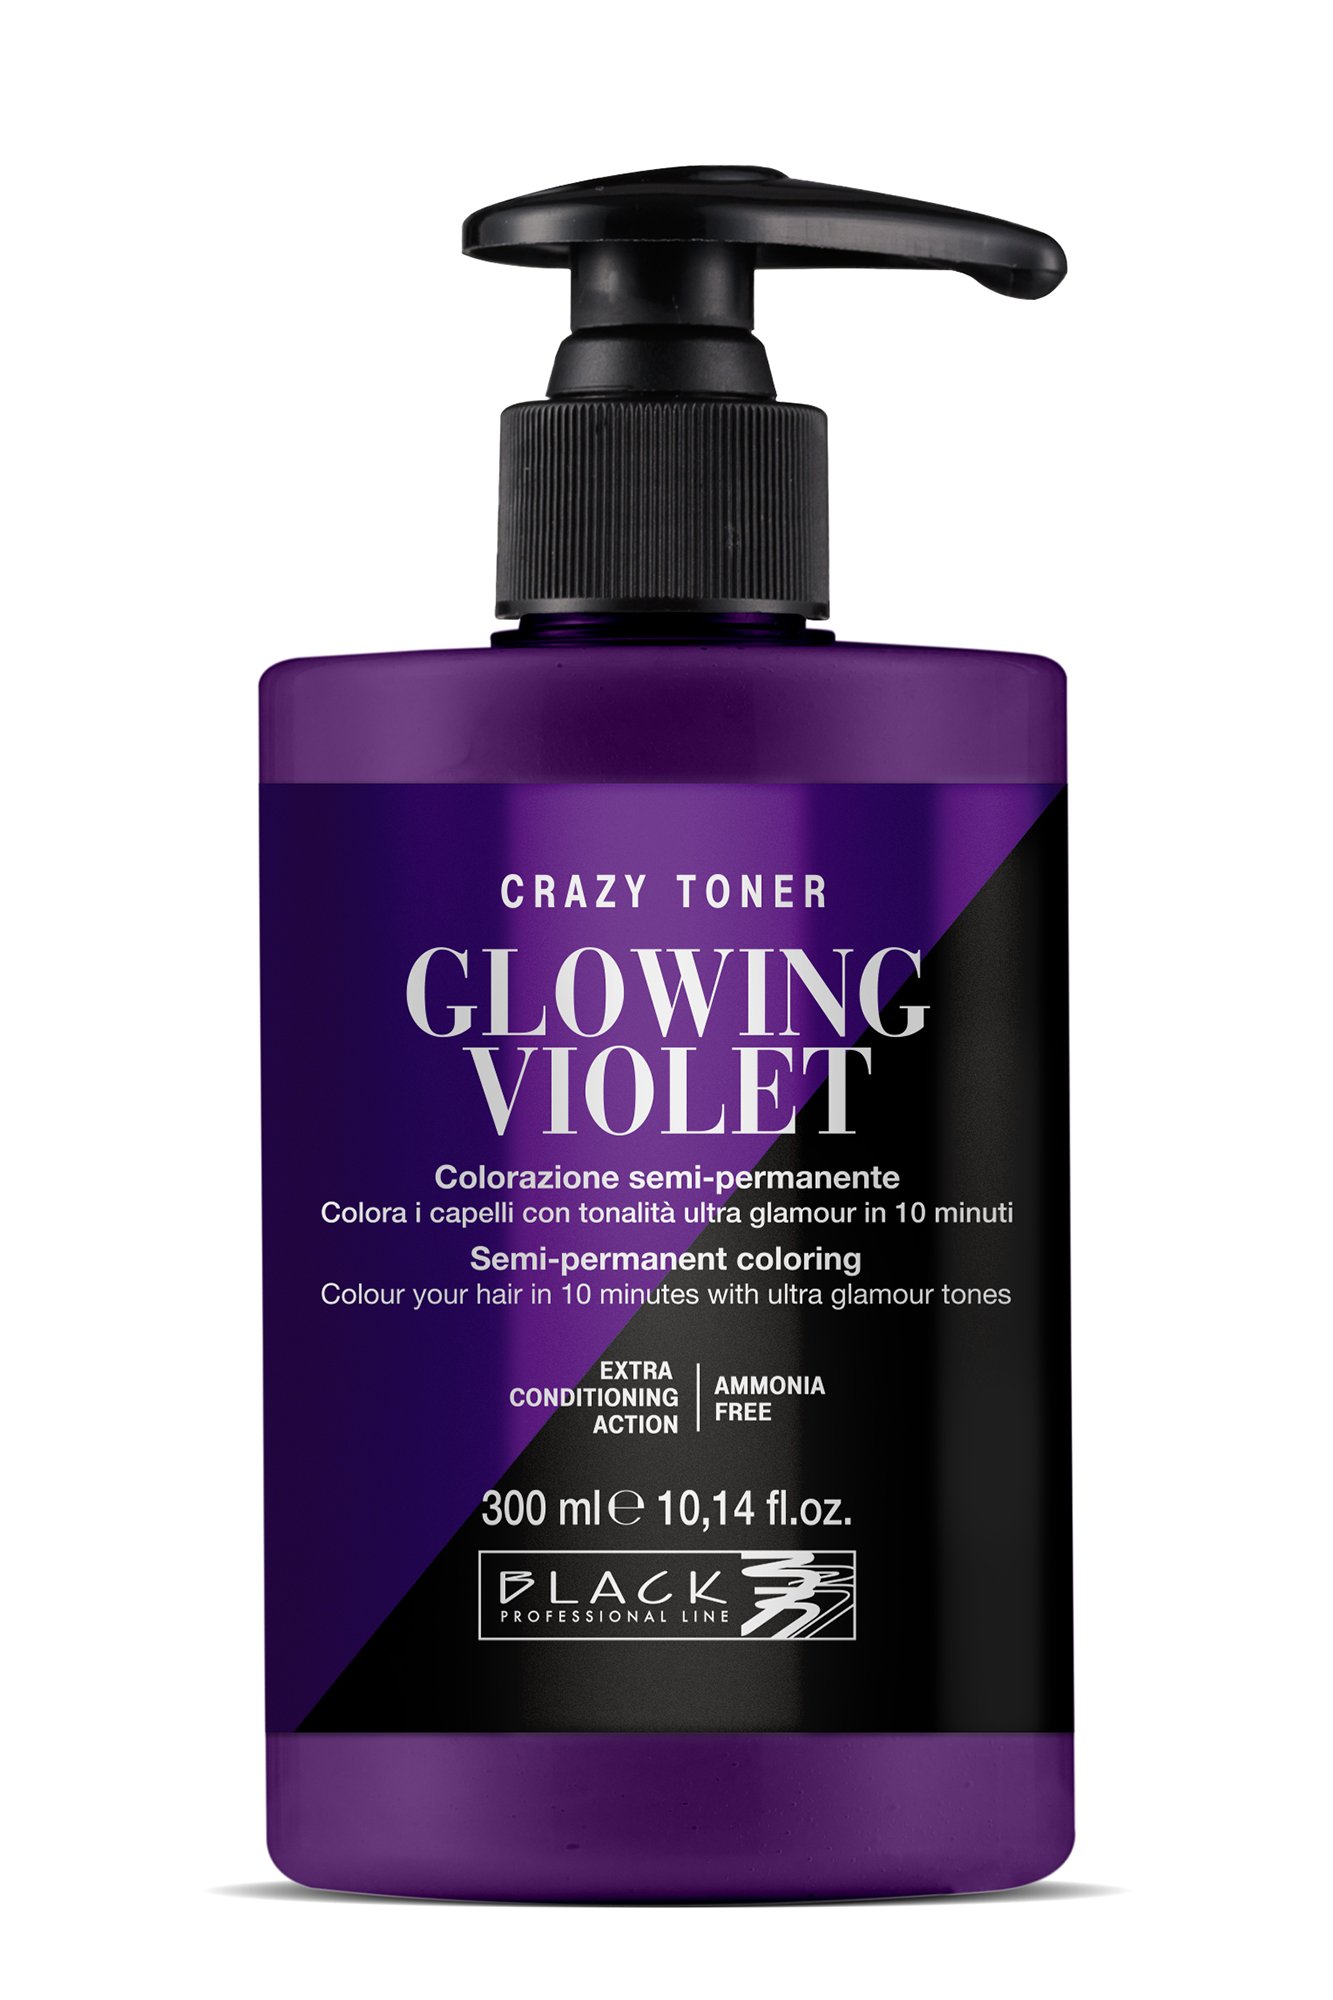 Barevný toner na vlasy Black Professional Crazy Toner - Glowing Violet (fialový) (154017) + dárek zdarma